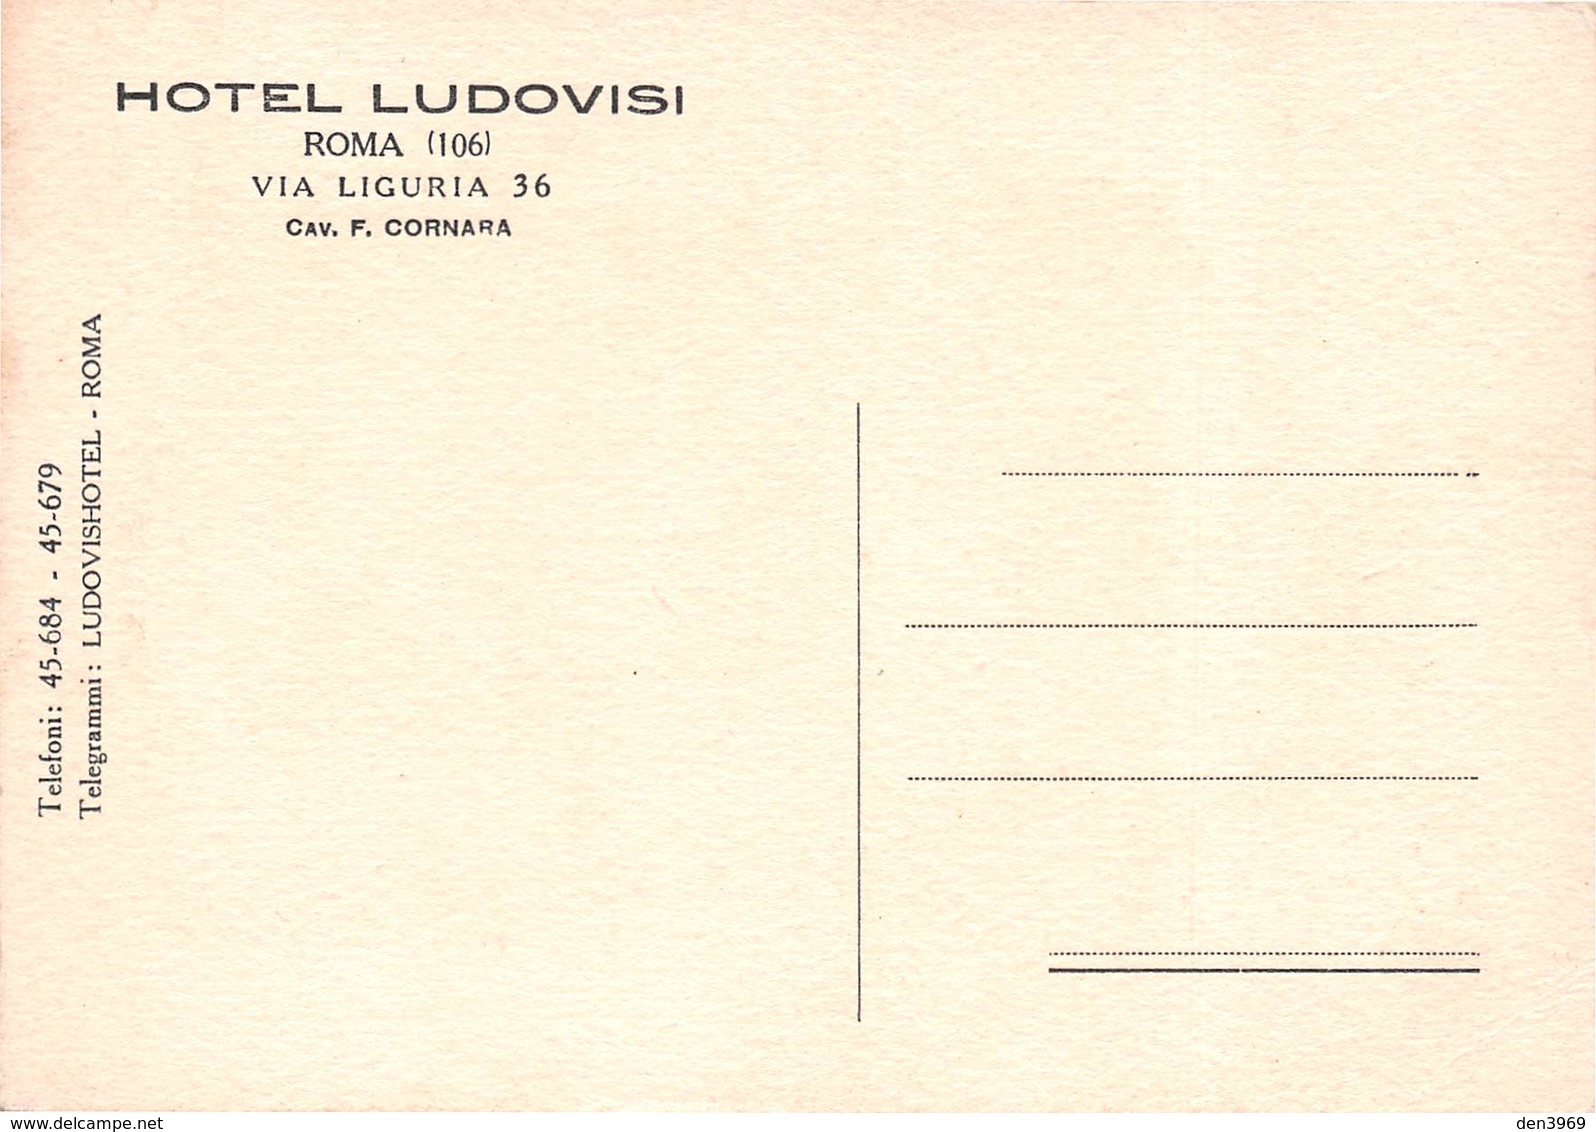 Italie - ROMA - Hotel Ludovisi, Via Liguria 36 - Cav. F. Cornara - Dessin - Bar, Alberghi & Ristoranti